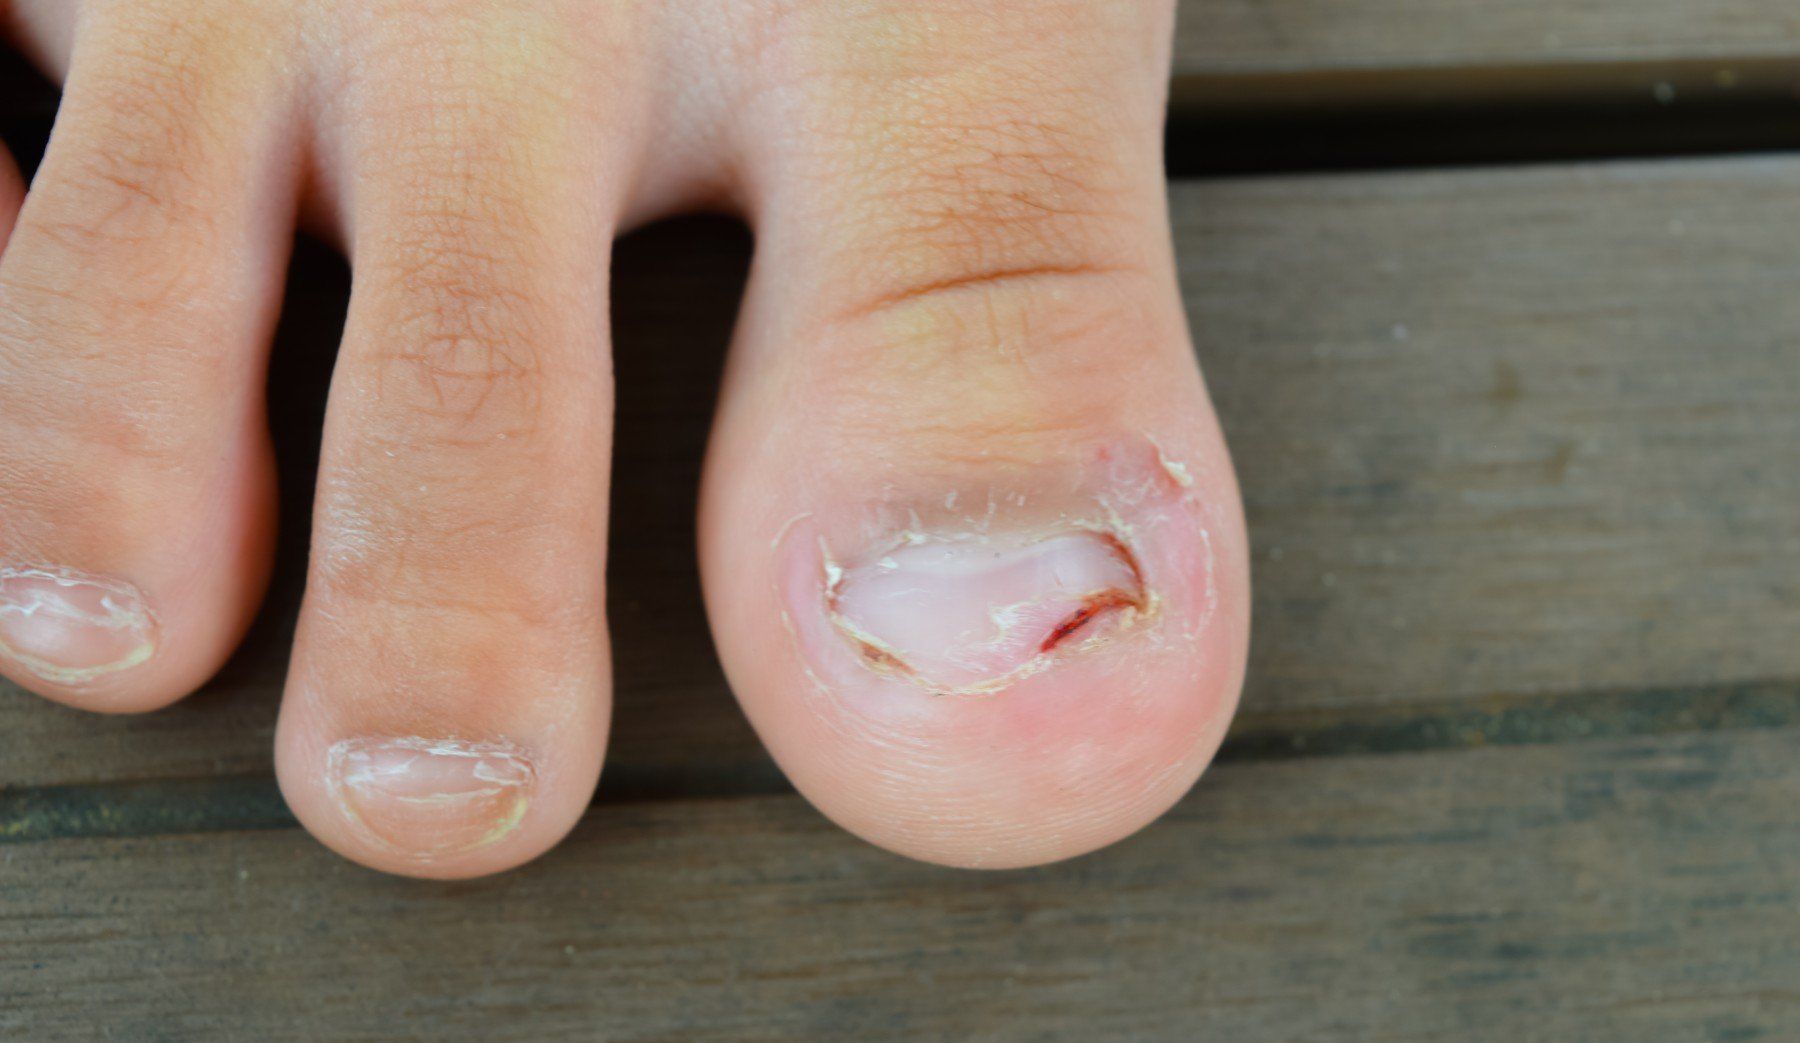 close-up-leg-with-fungus-nails-onycholysis-exfoliation-nail-from-nail-bed